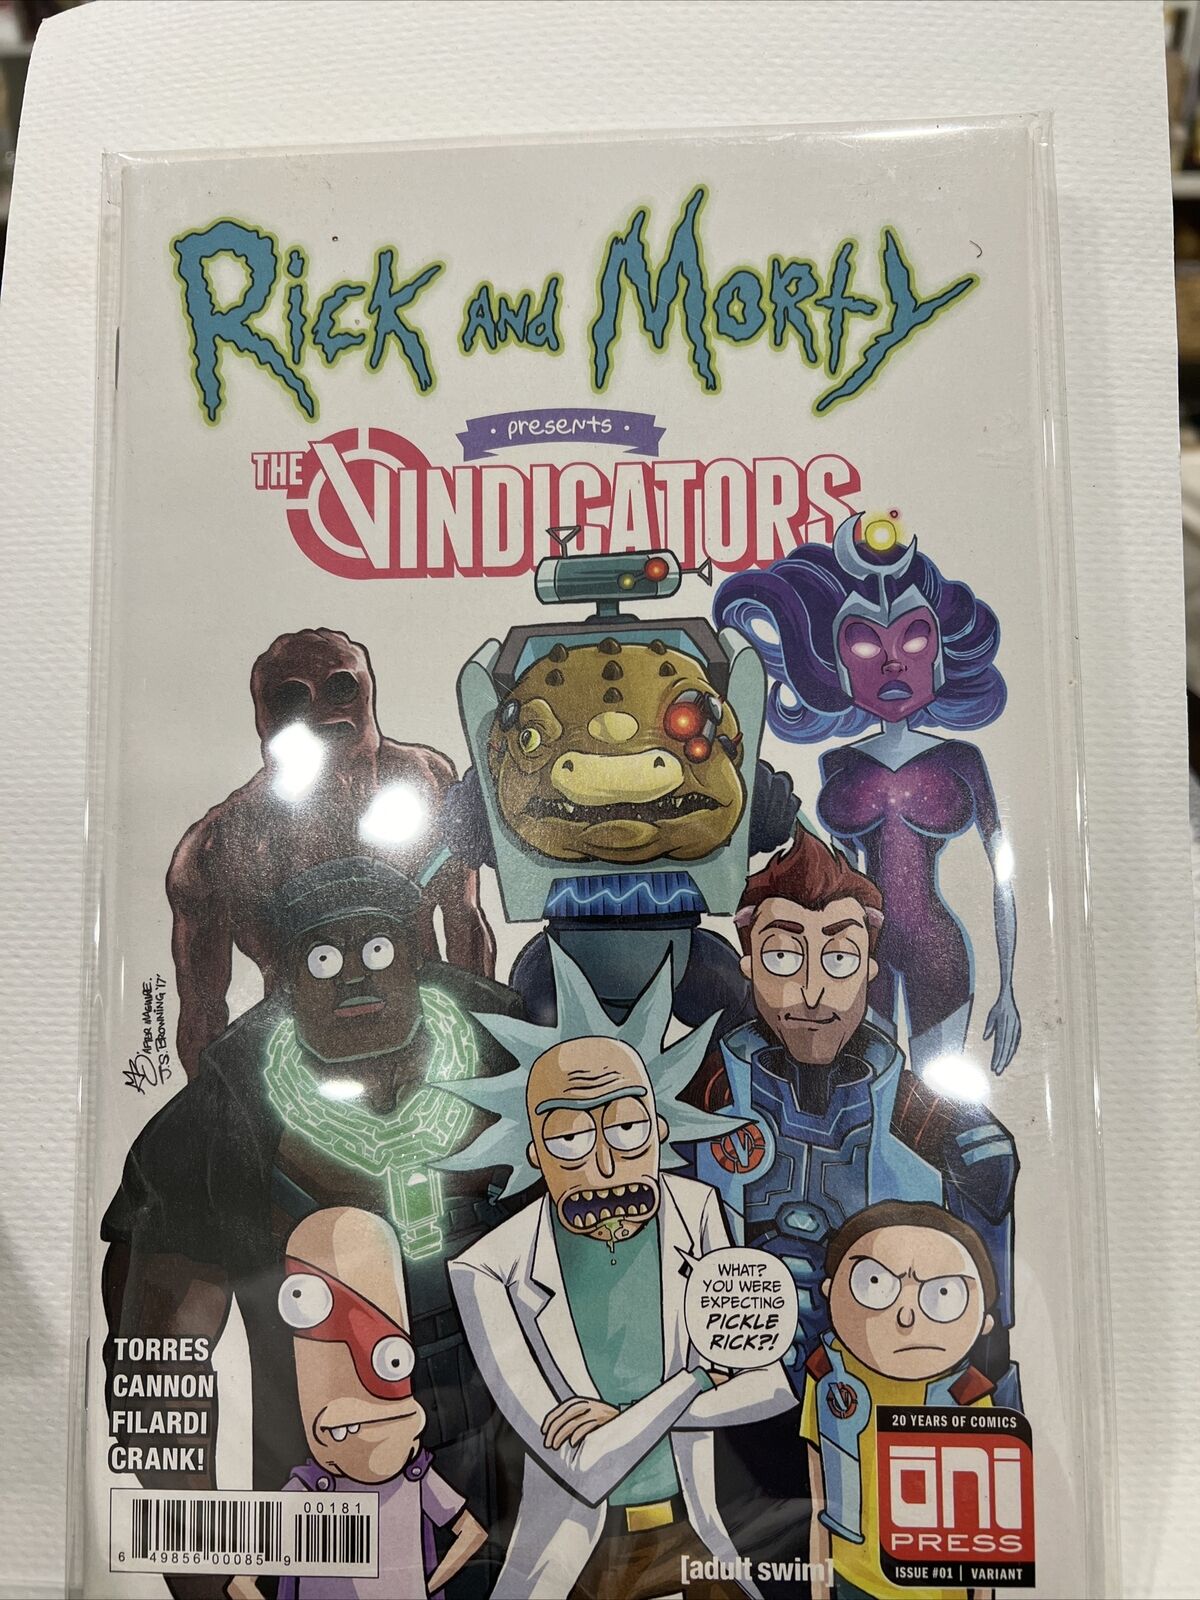 Rick And Morty Presents The Vindicators Vol 1 #1 March 2018 Softcover Comic Book